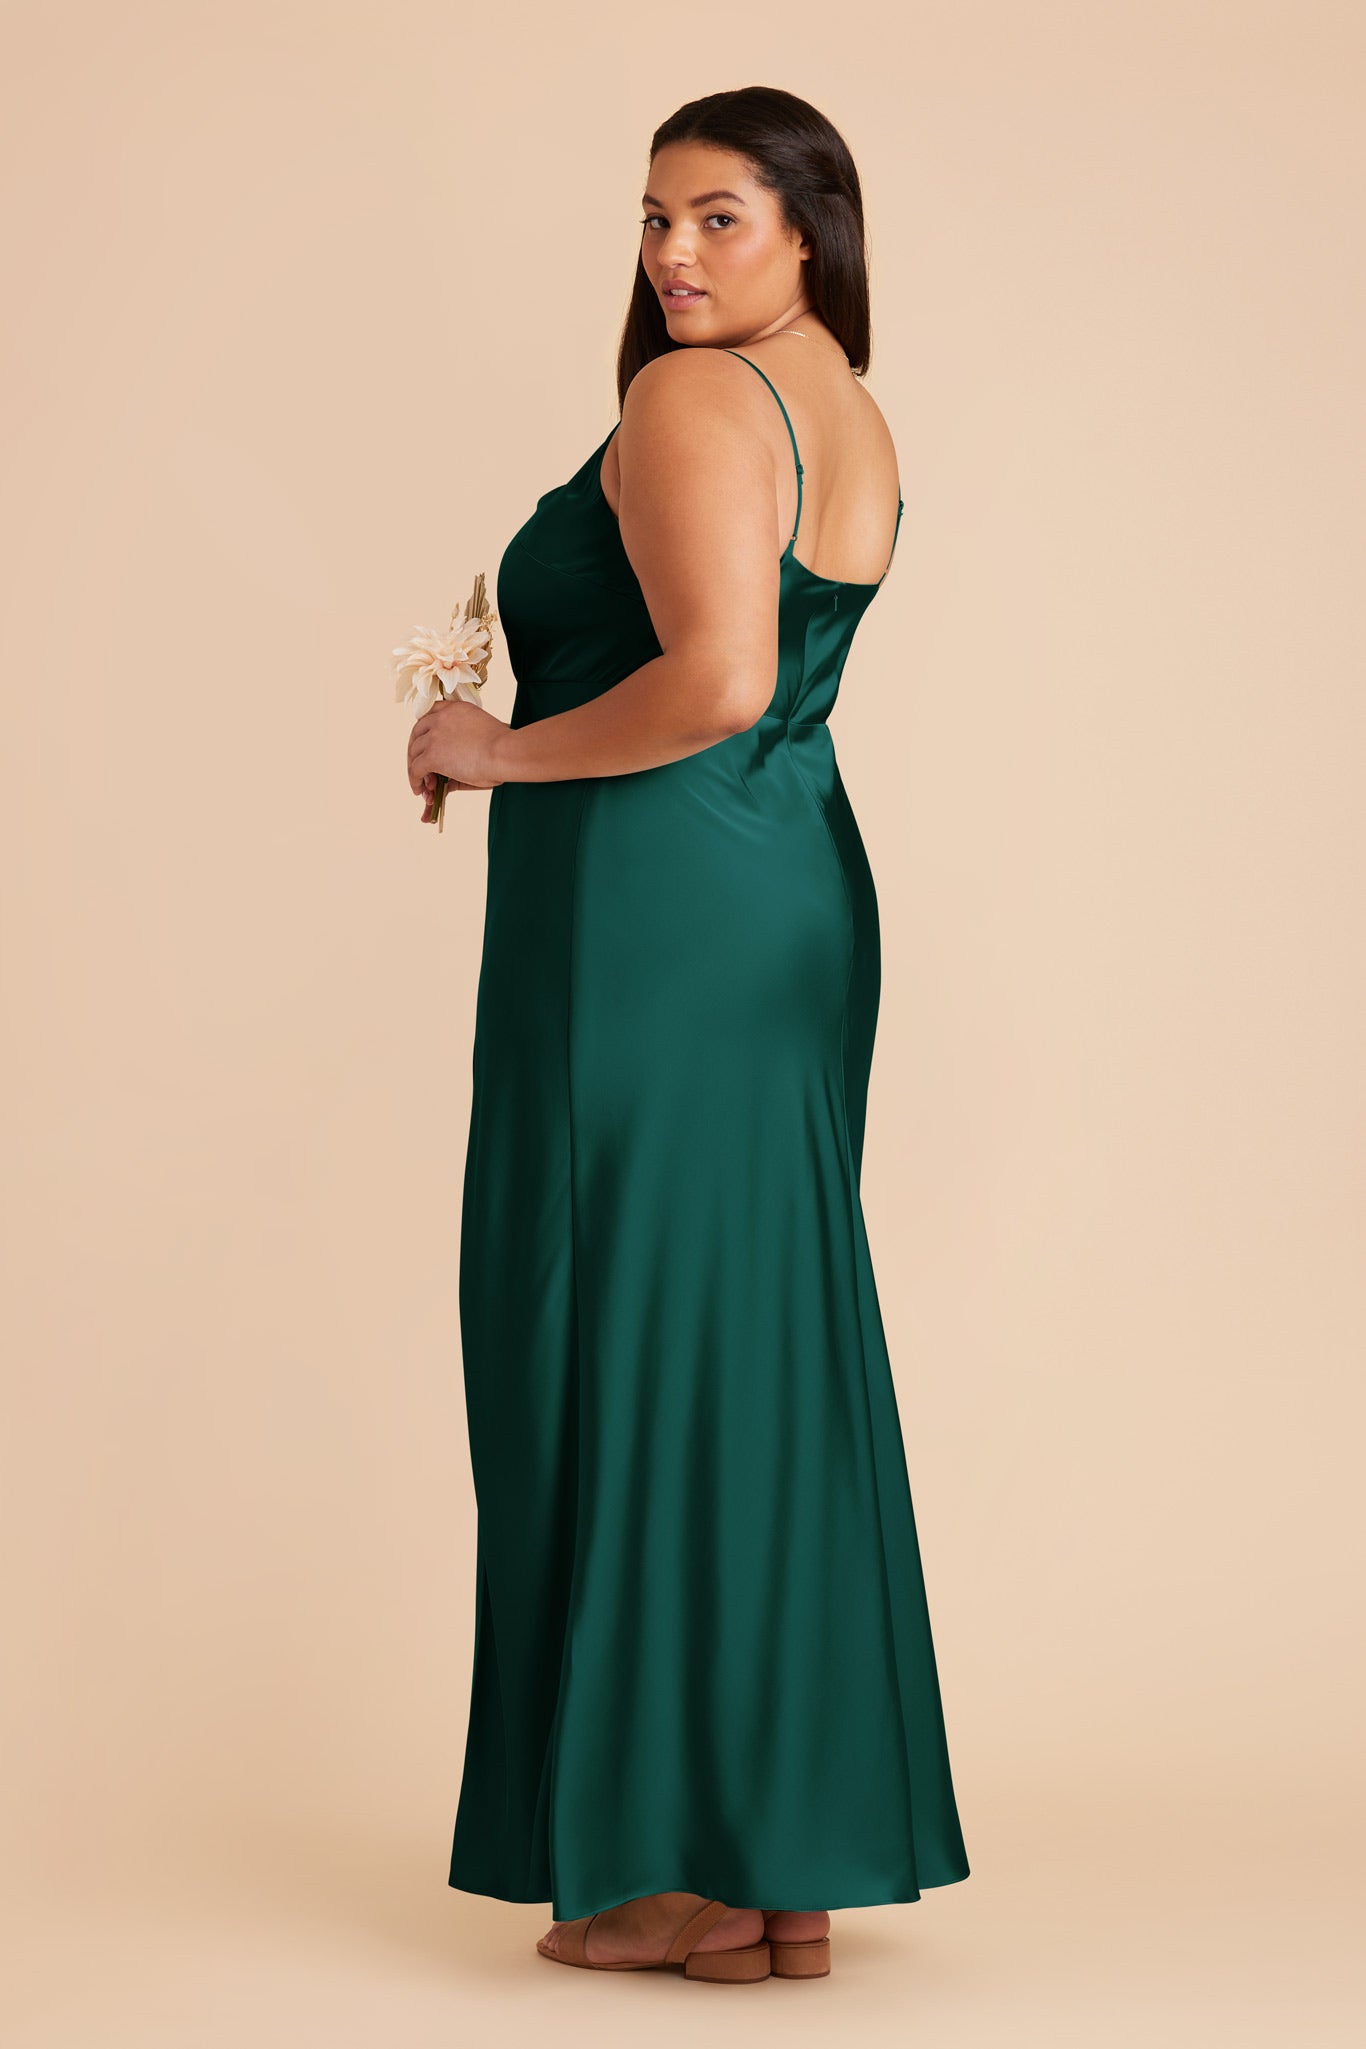 Emerald Lisa Long Matte Satin Dress by Birdy Grey